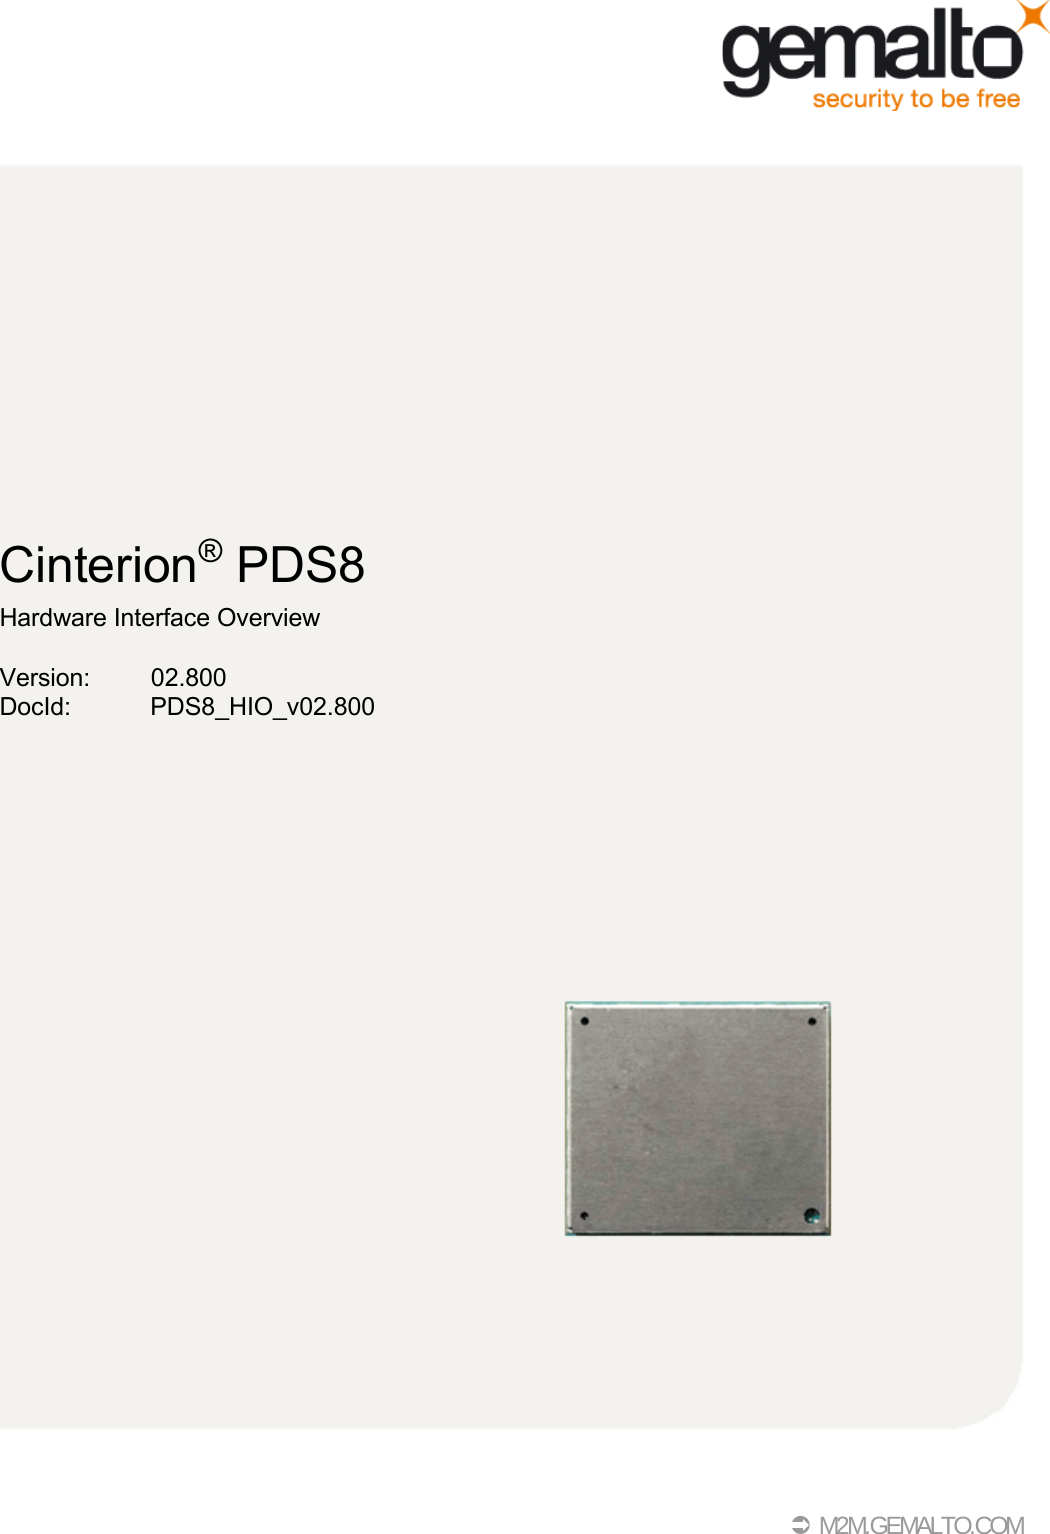                     Cinterion®  PDS8 Hardware Interface Overview Version:  02.800 DocId:  PDS8_HIO_v02.800                            M2M.GEMALTO.COM 